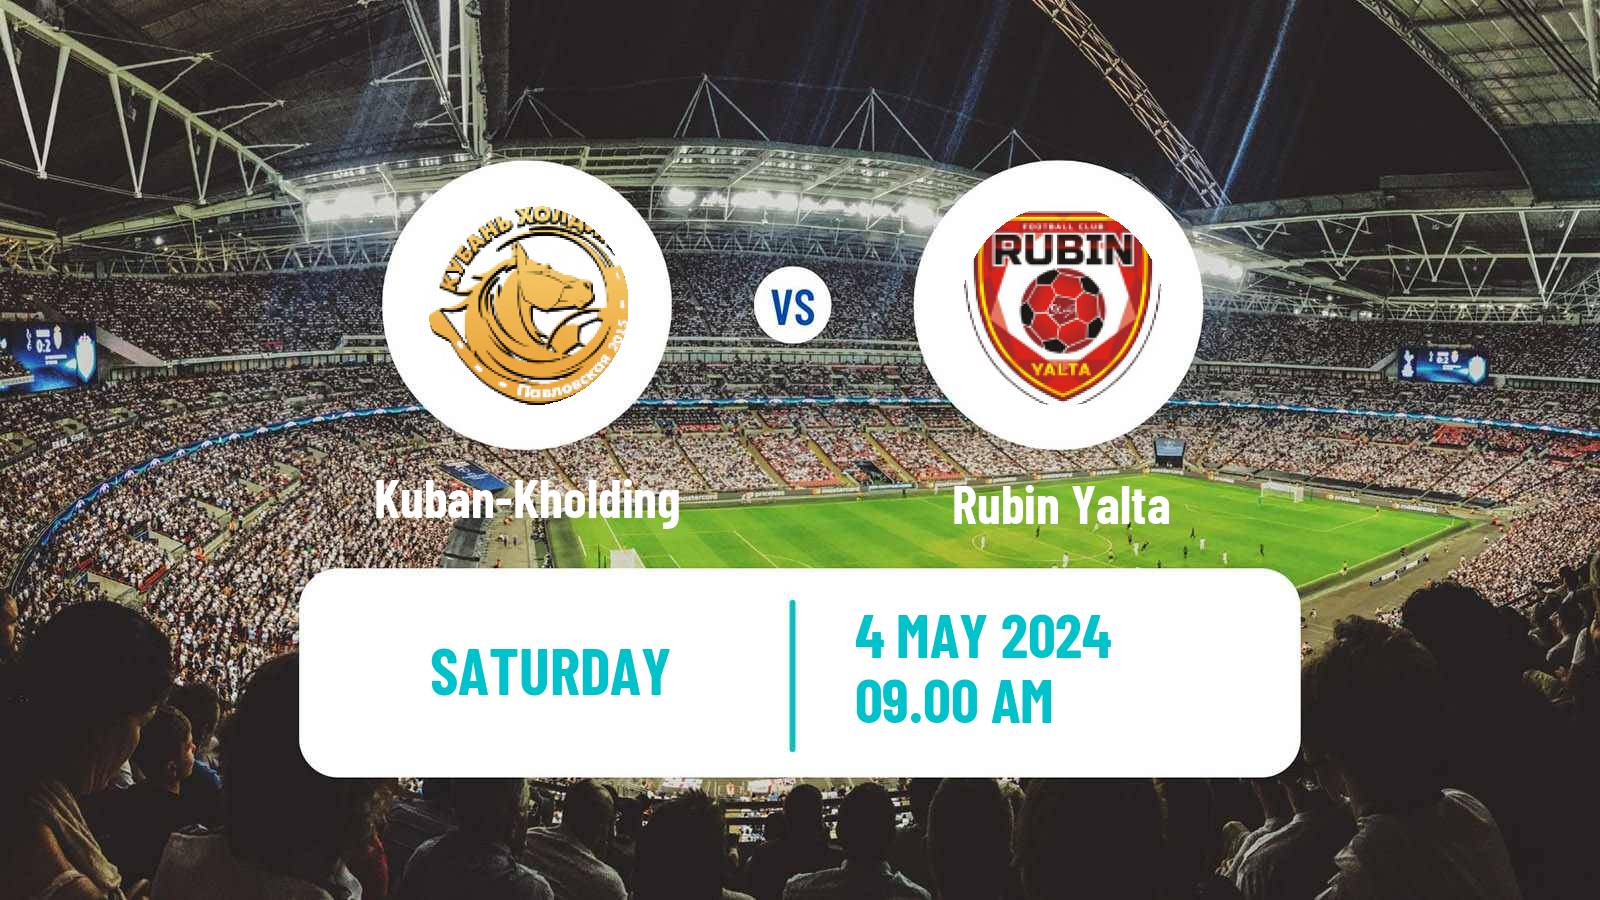 Soccer FNL 2 Division B Group 1 Kuban-Kholding - Rubin Yalta